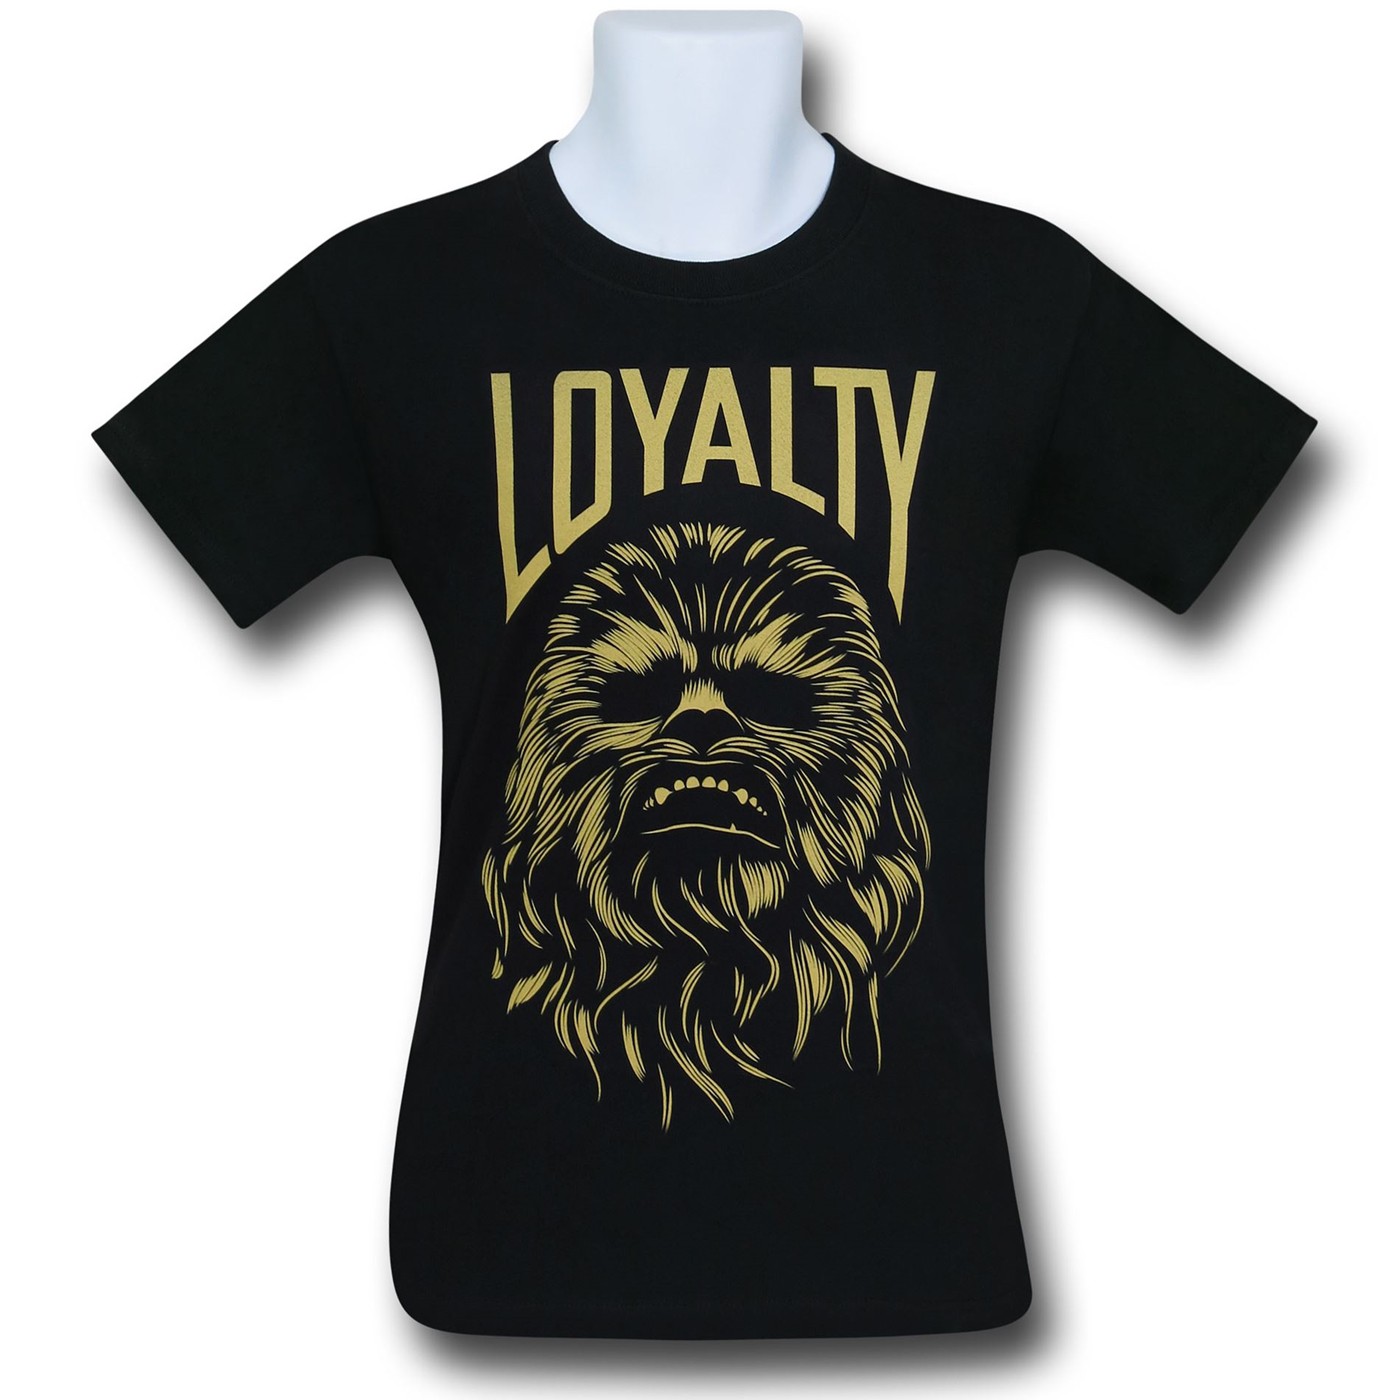 Star Wars Chewbacca Loyalty Men's T-Shirt